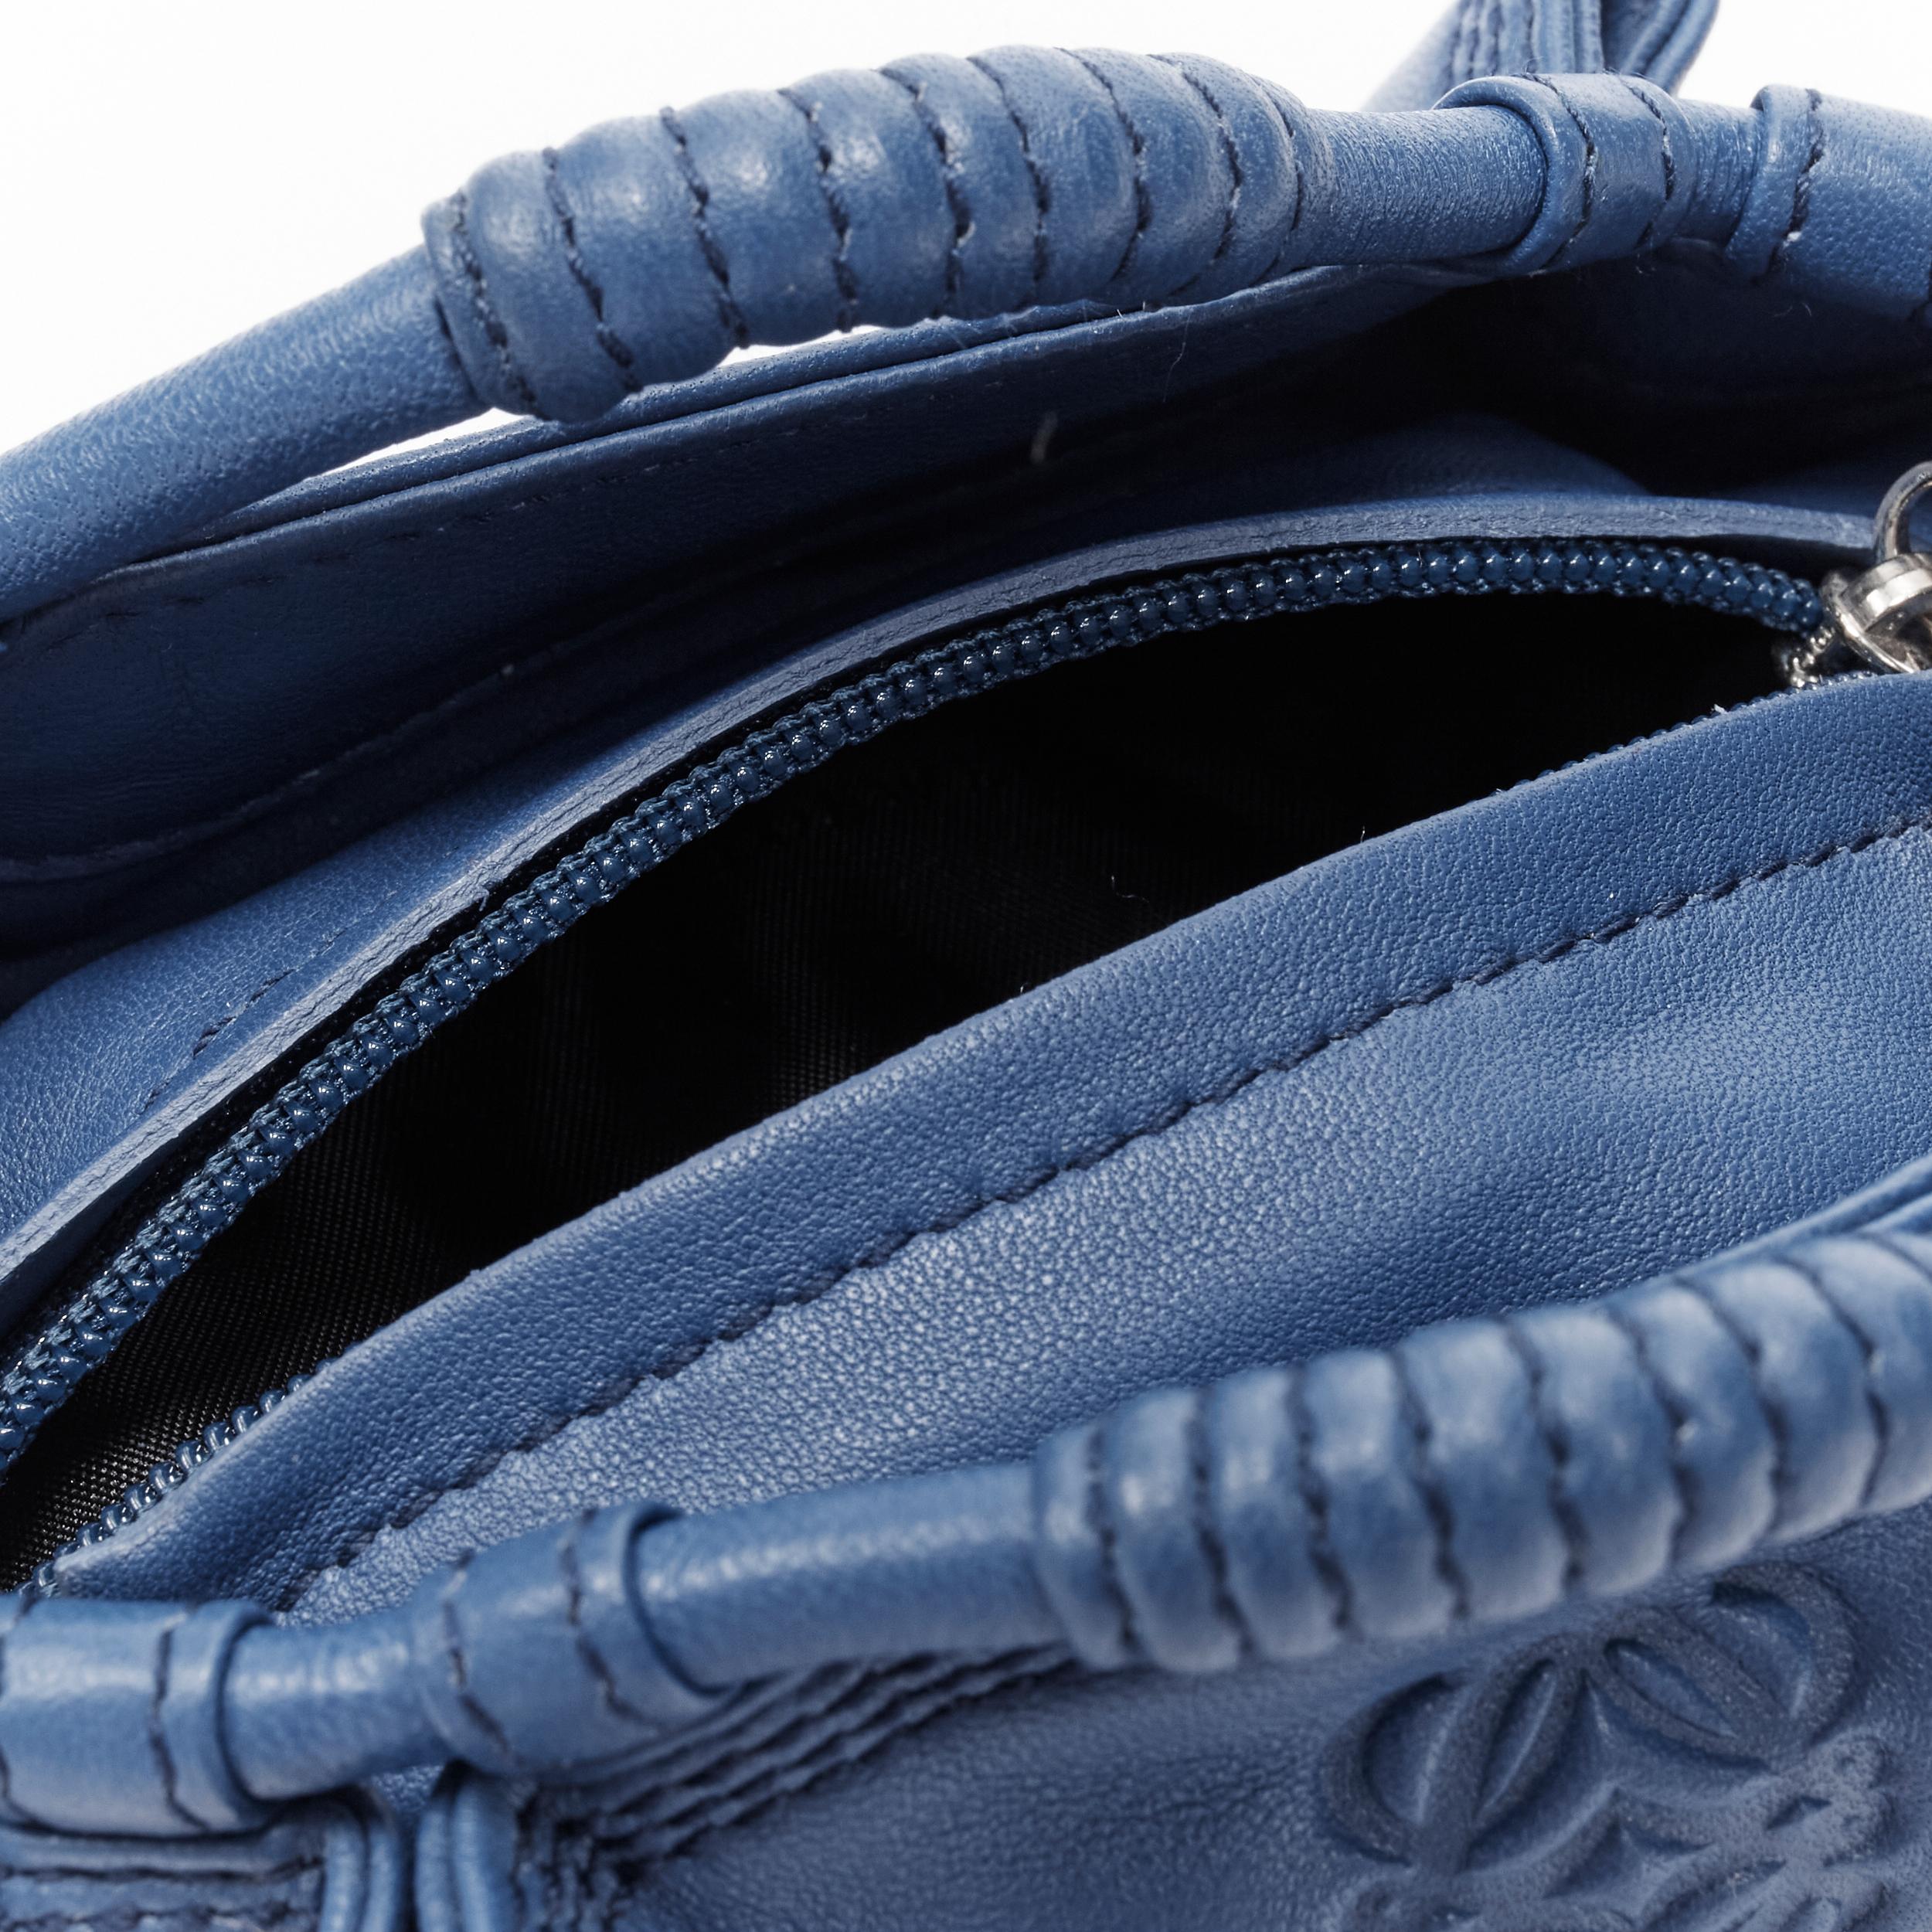 LOEWE Nano Aire Brisa blue nappa leather micro bag coin purse pouch 2